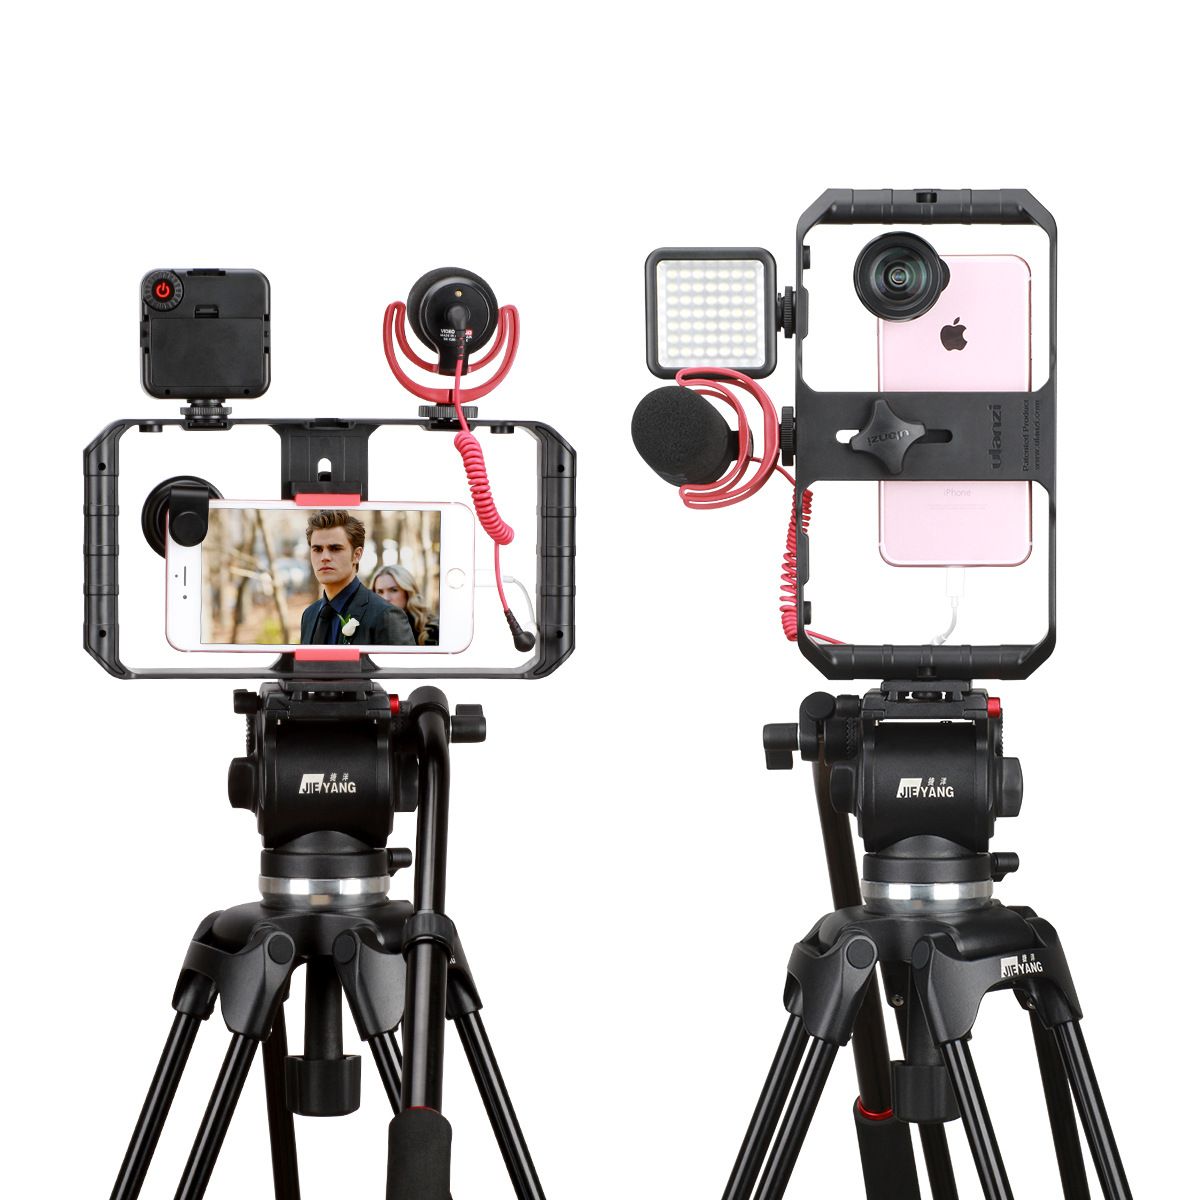 Ulanzi-U-Rig-Pro-Smartphone-Video-Rig-Filmmaking-Case-Handheld-Stabilizer-Grip-with-3-Shoe-Mount-1270522